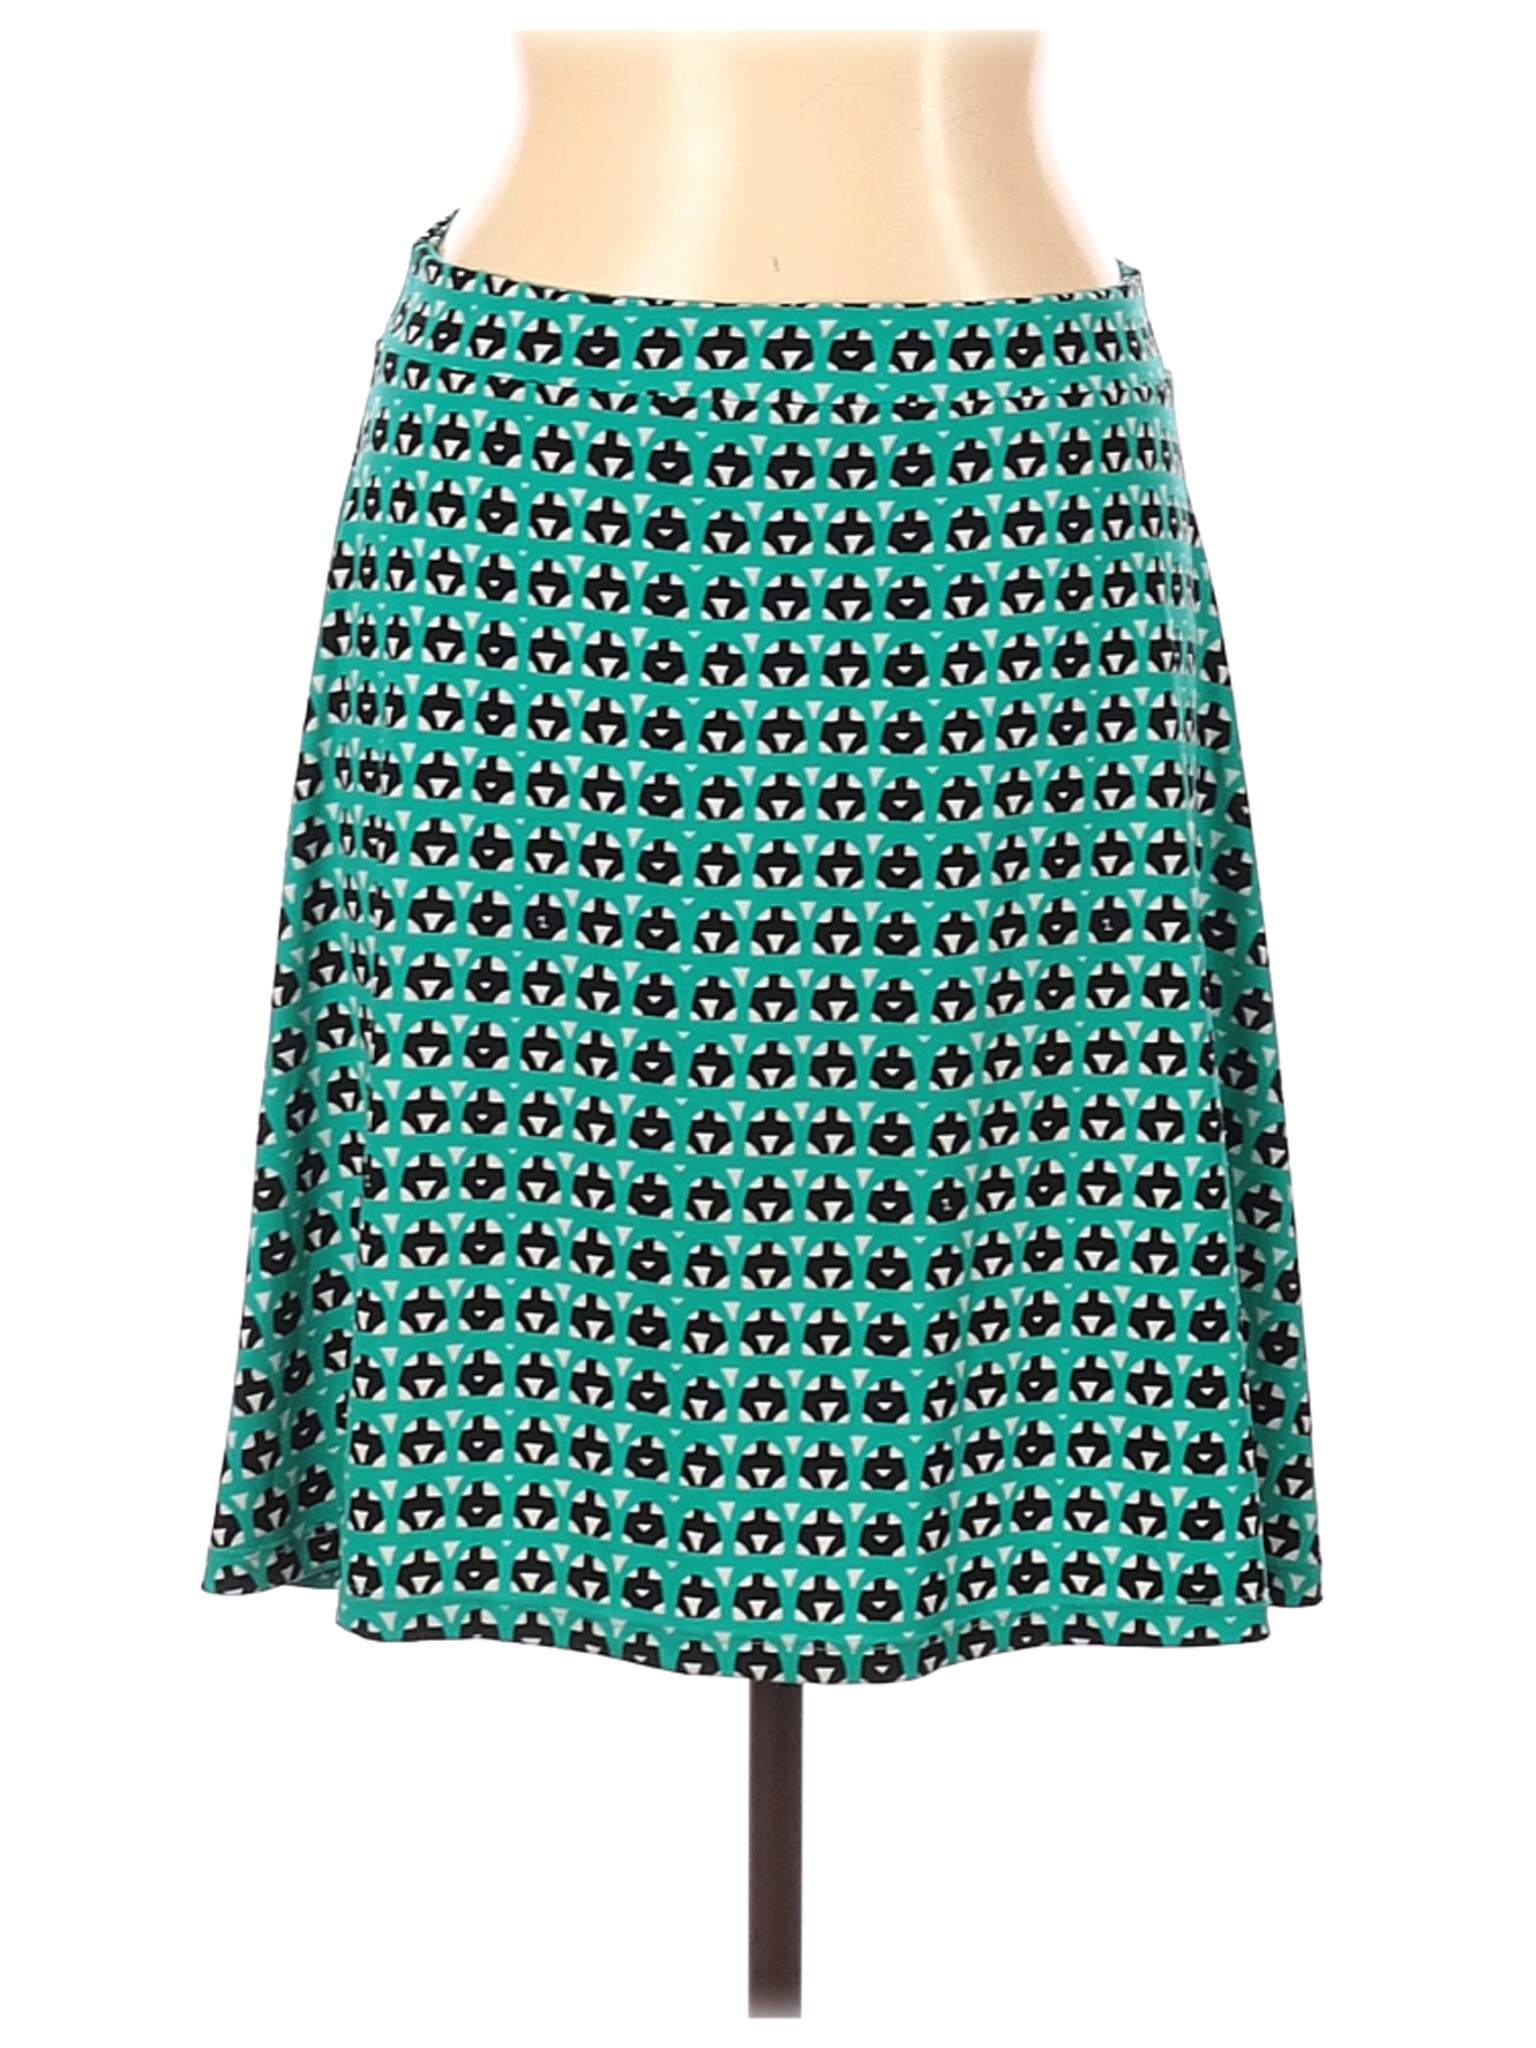 Leota Women Green Casual Skirt L | eBay